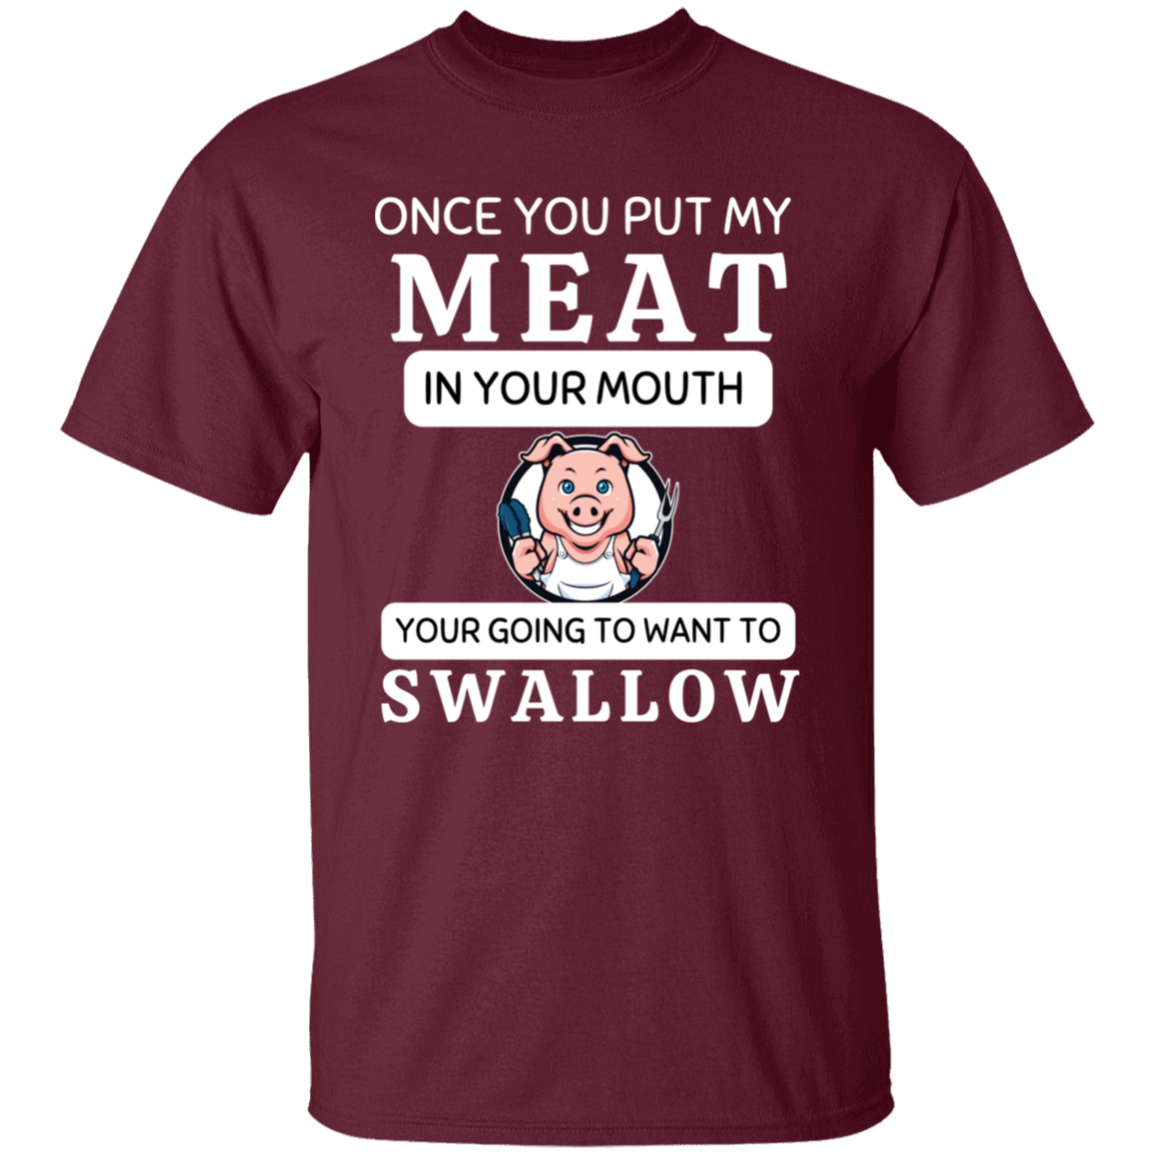 My Meat Men's T-Shirt